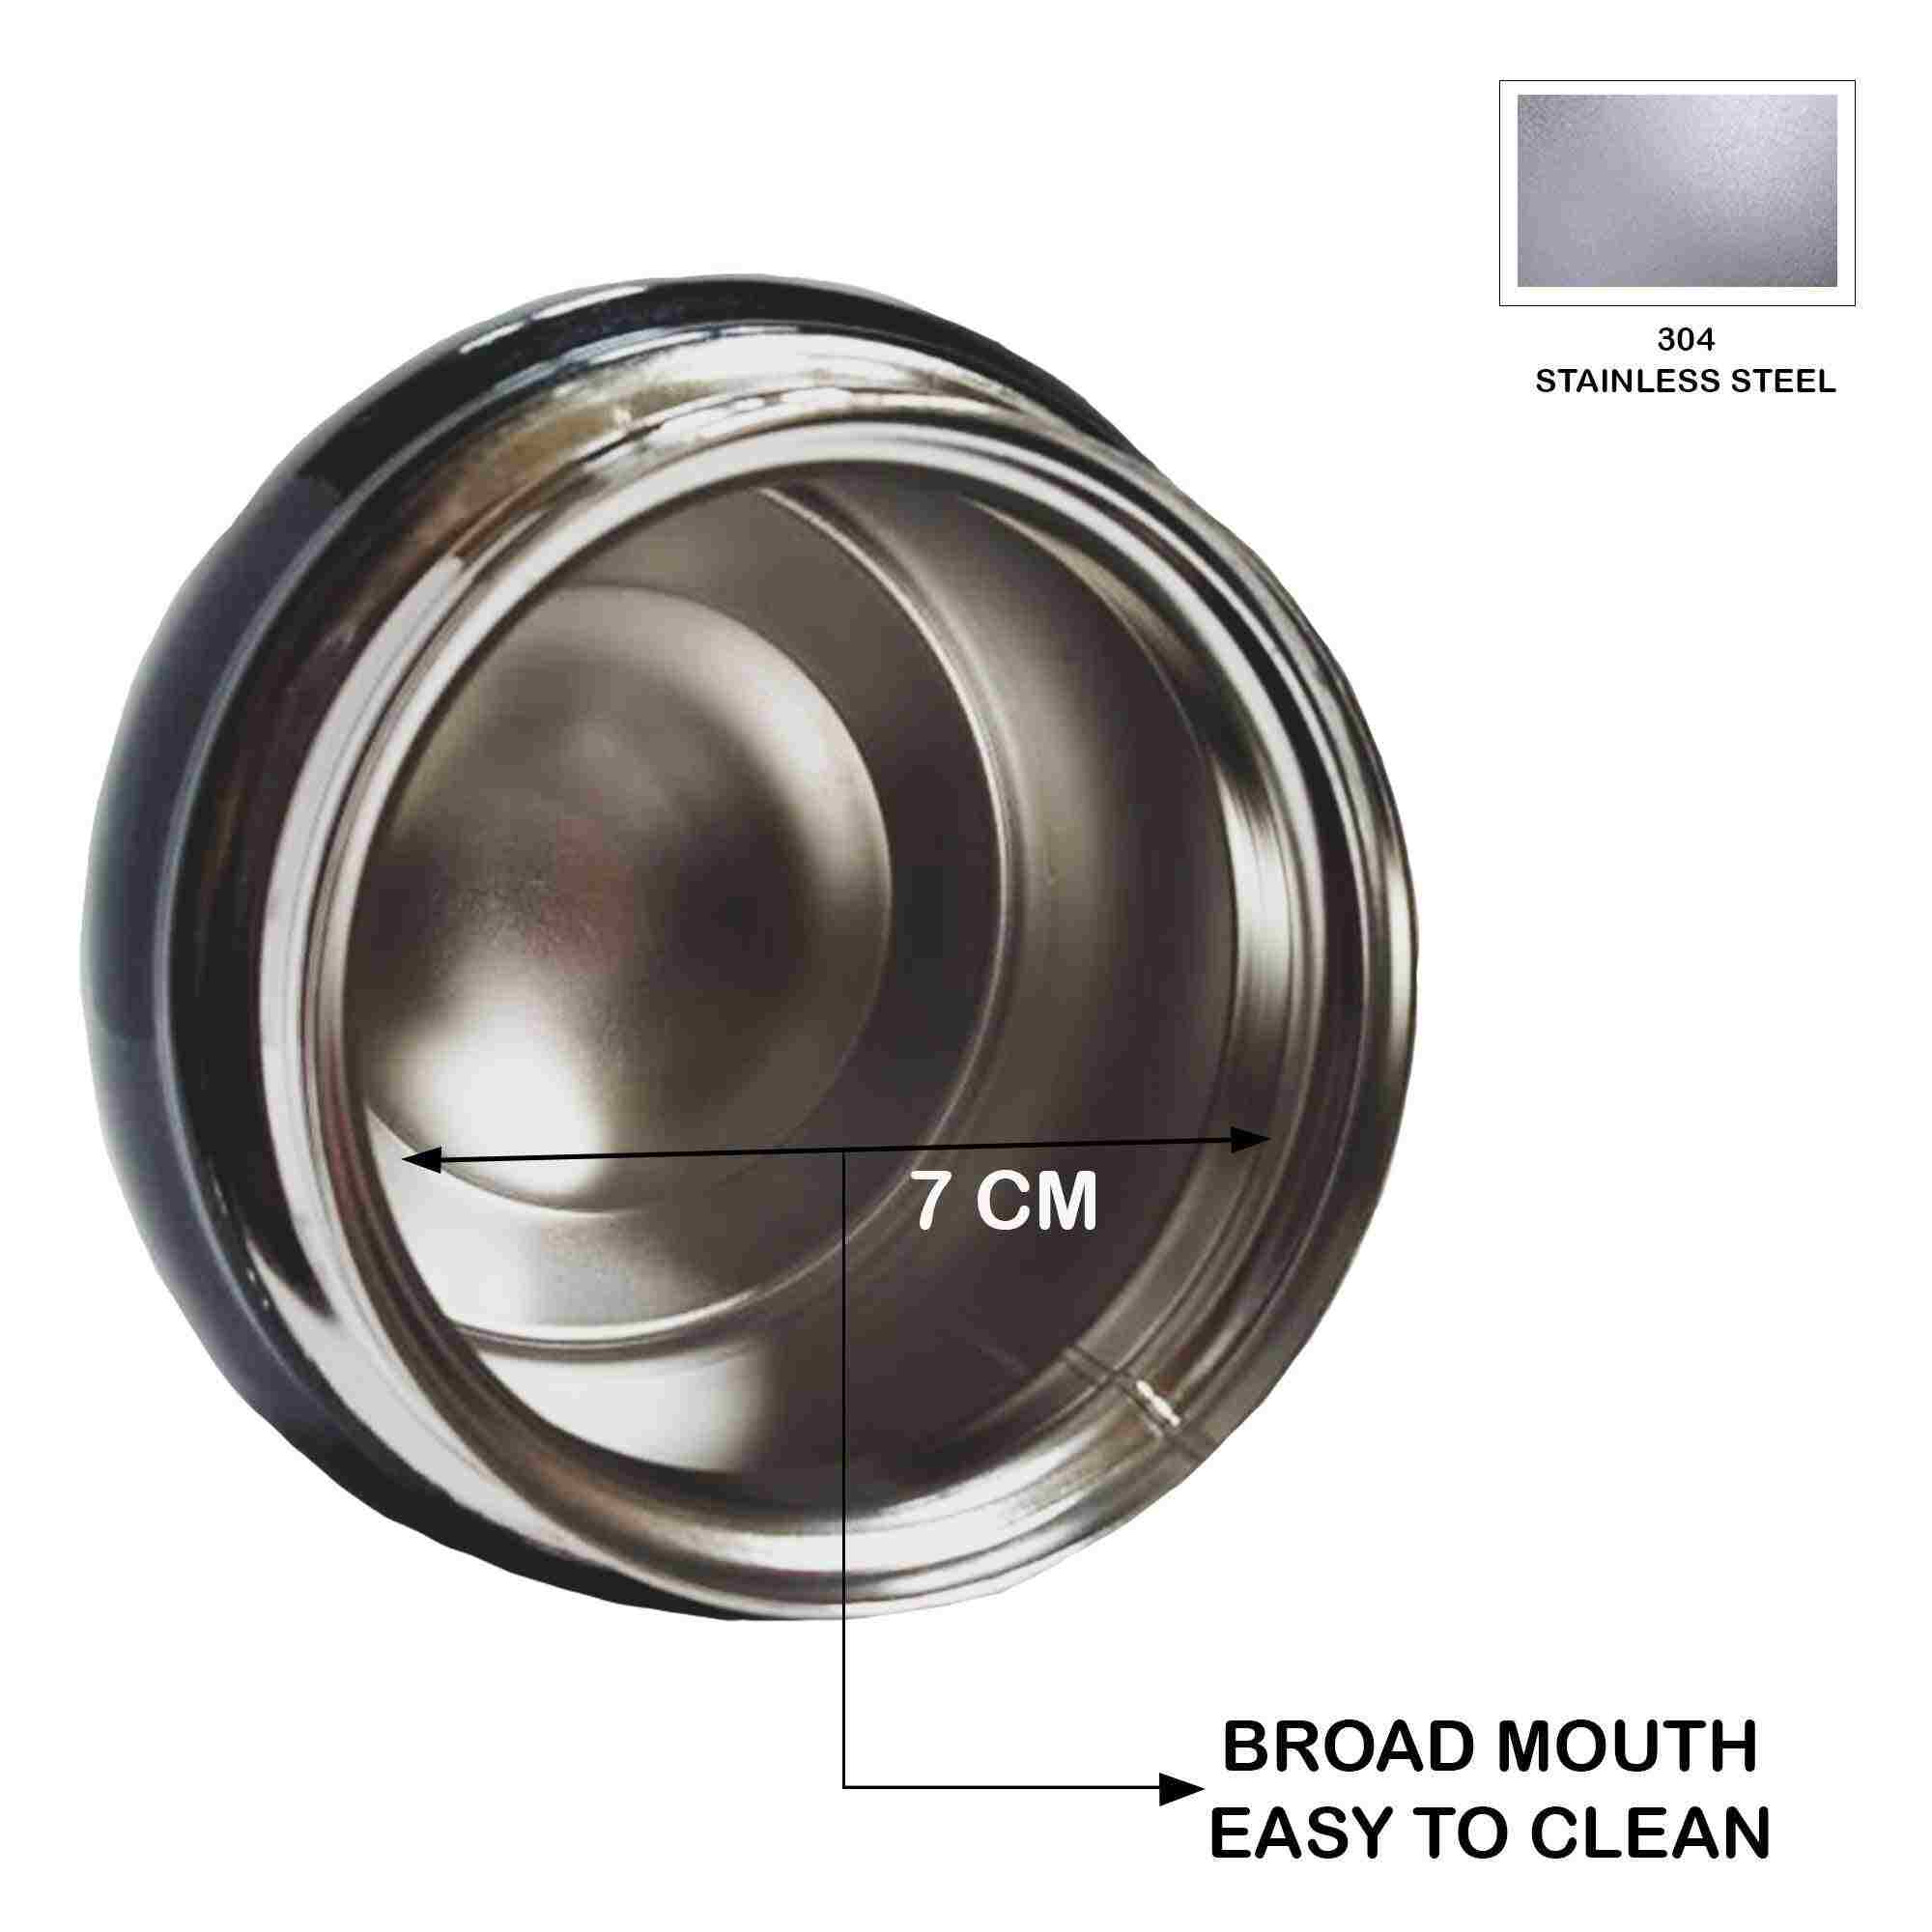 Pluto Sambar Jar Vacuum Insulated Food Jar